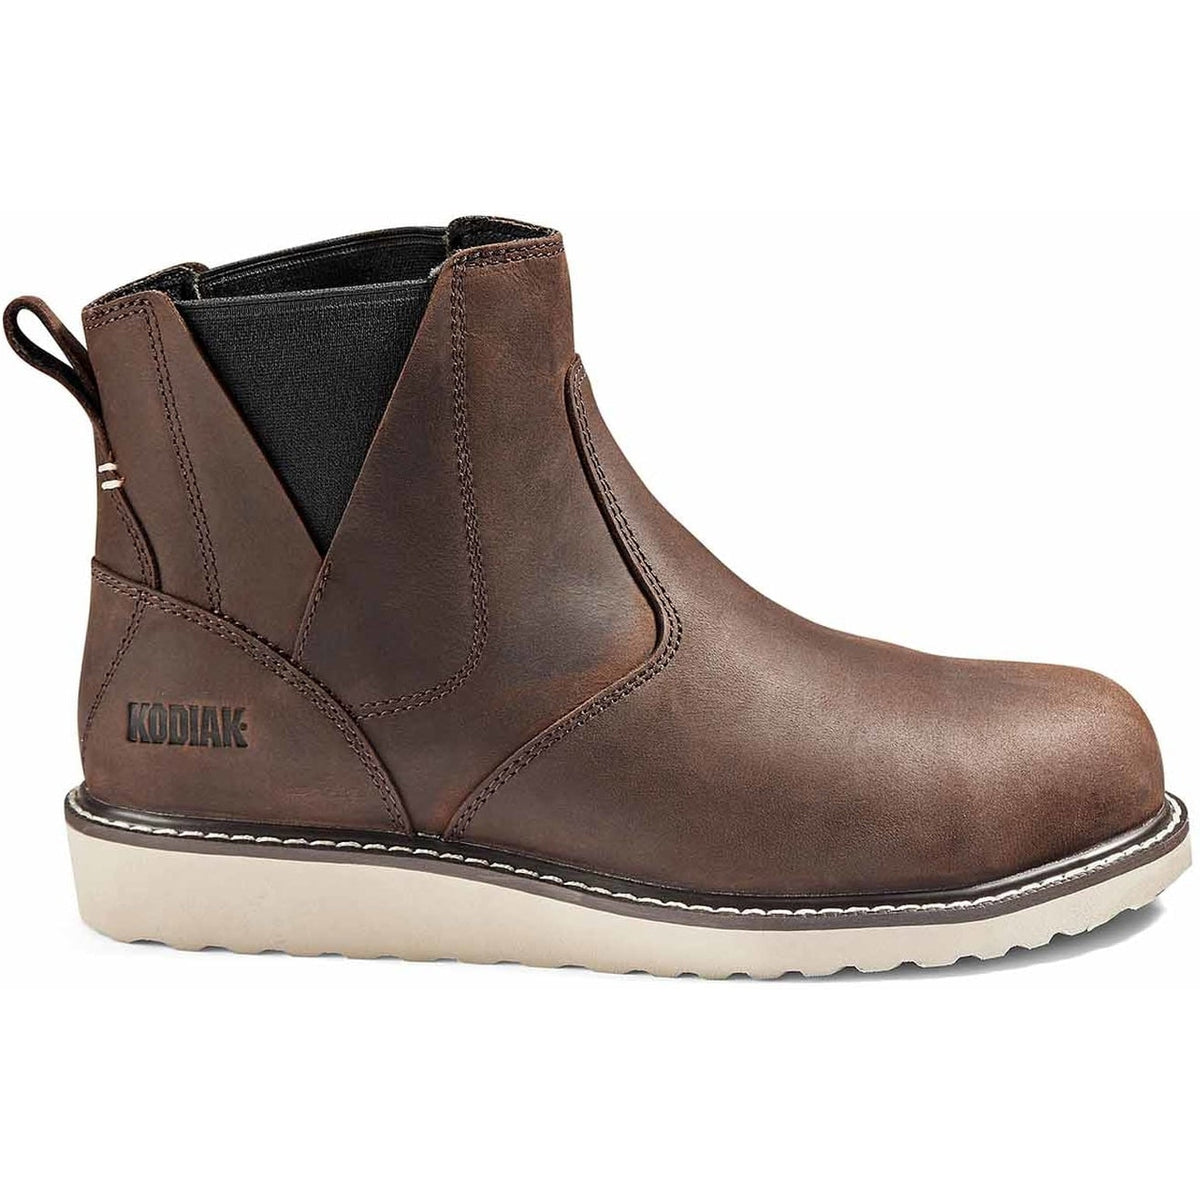 Kodiak Work Boots & Safety Shoes | Overlook Boots